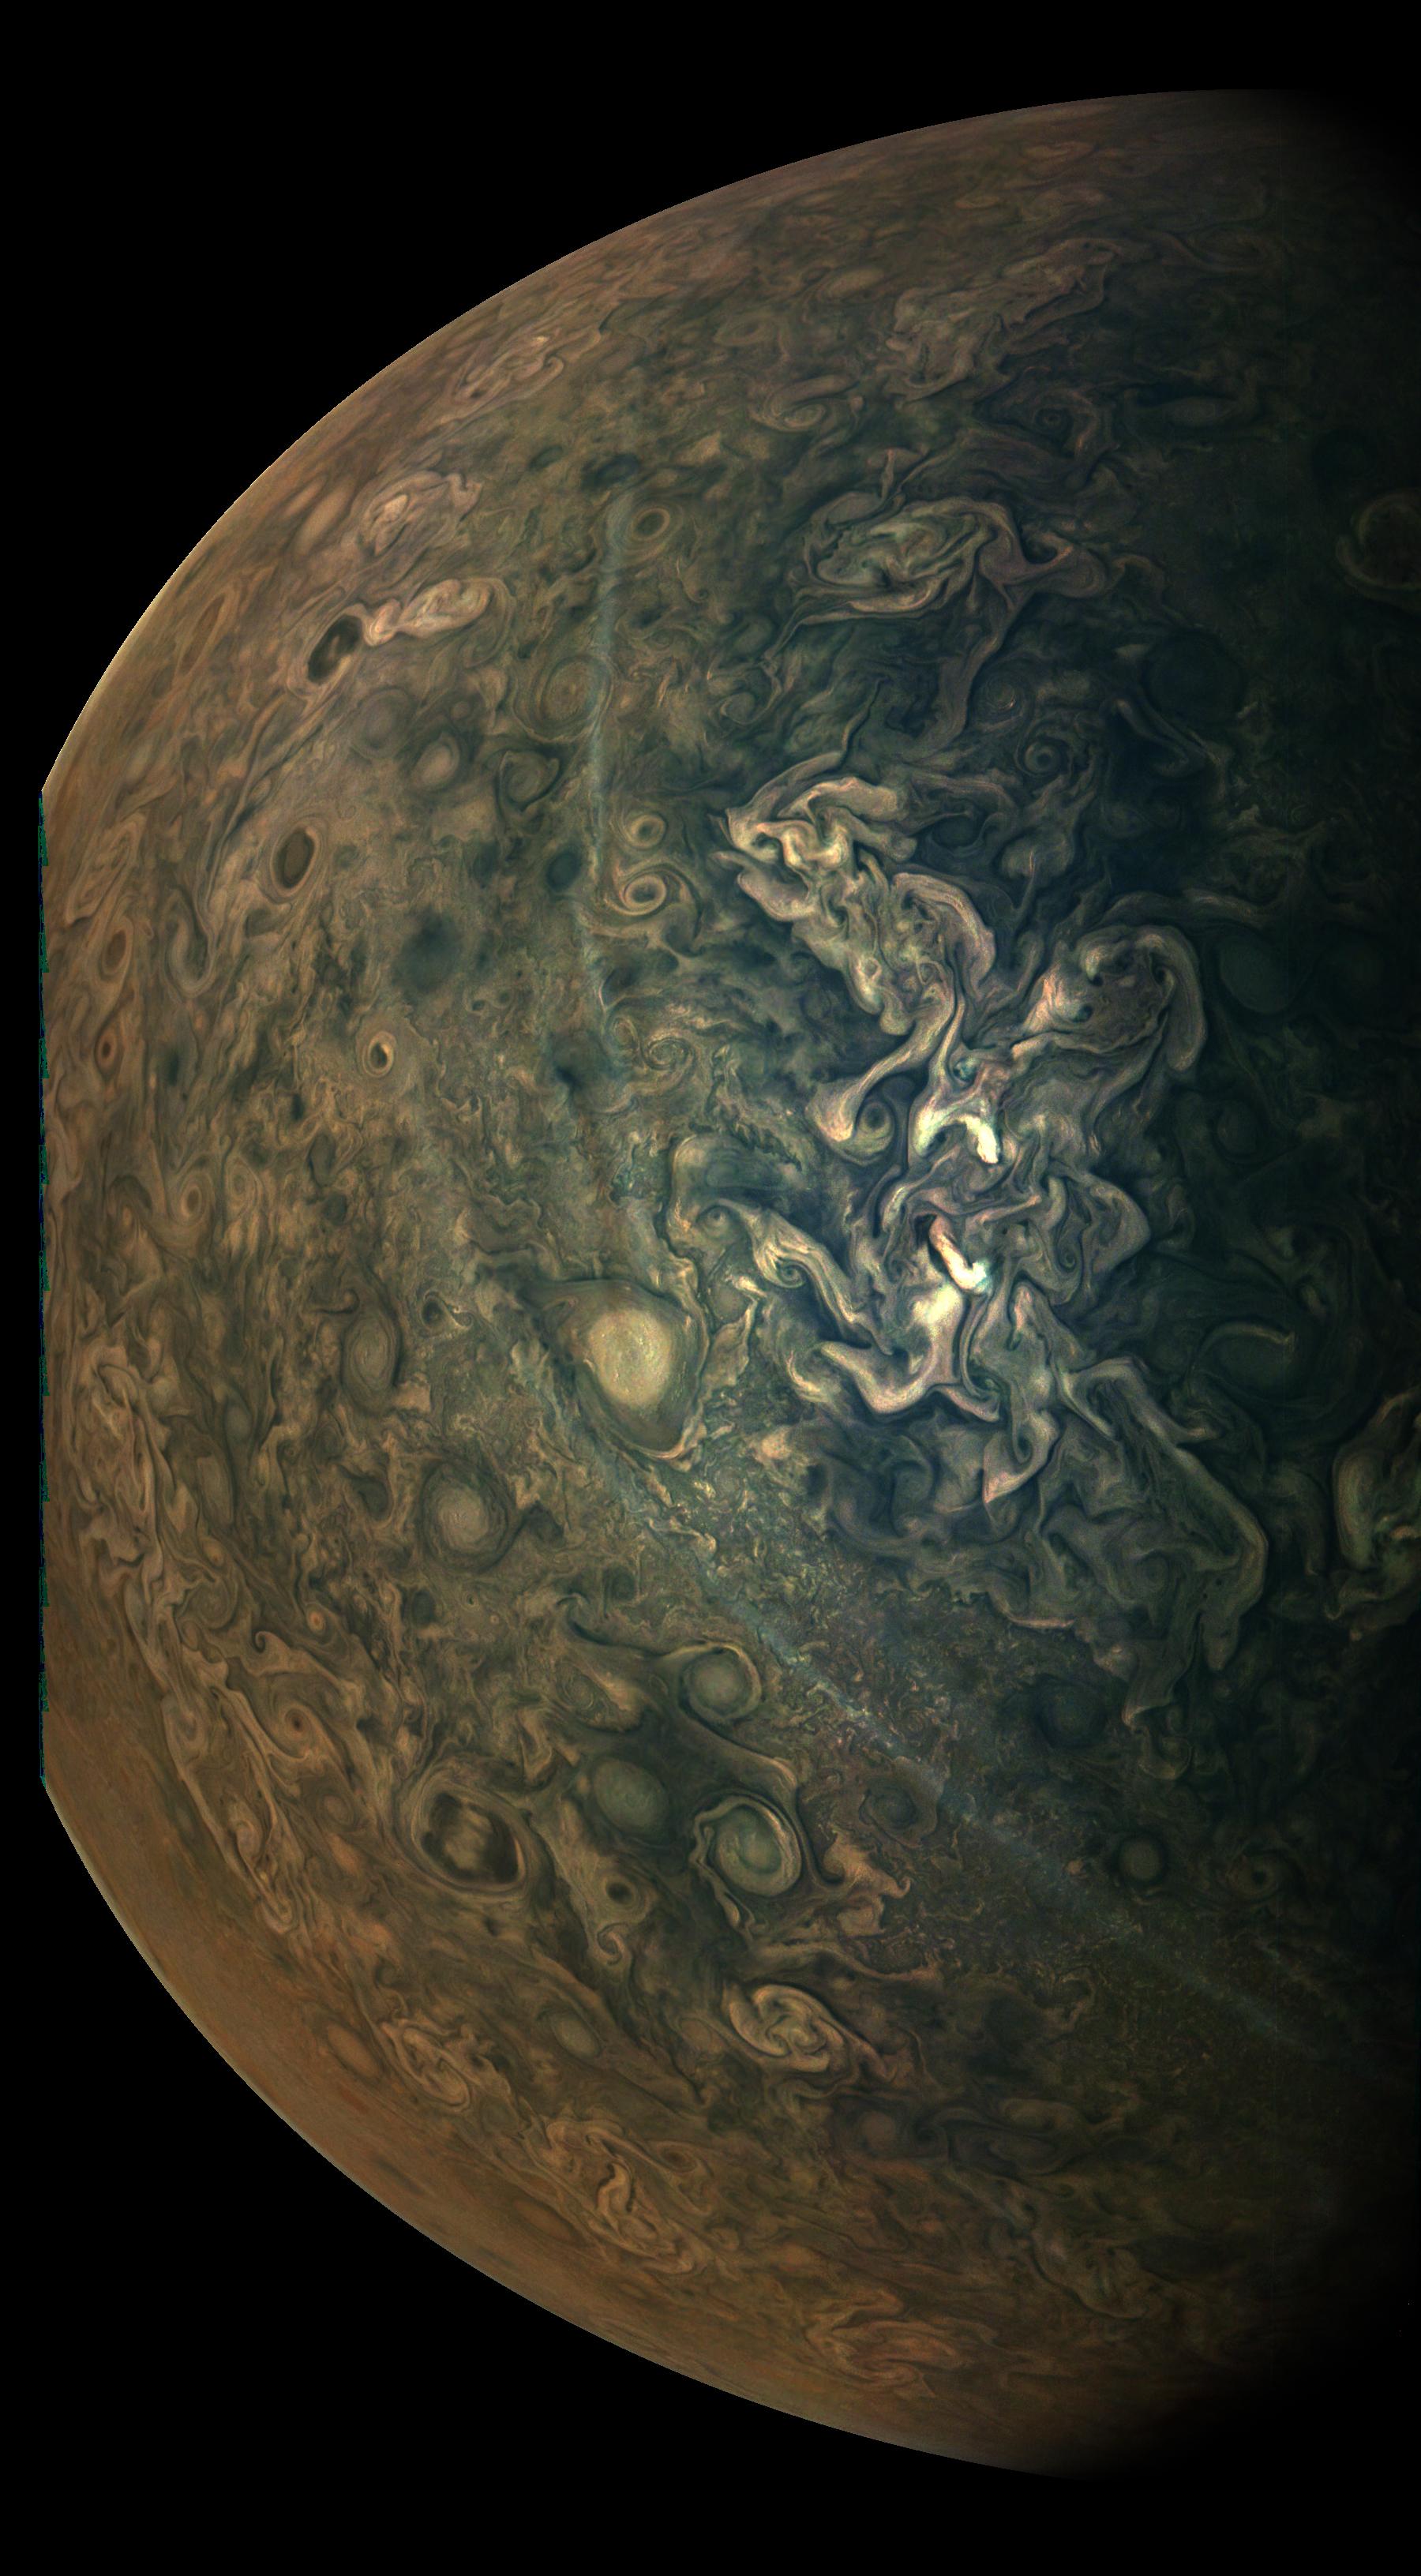 PIA23802: High-Altitude Hazes on Jupiter